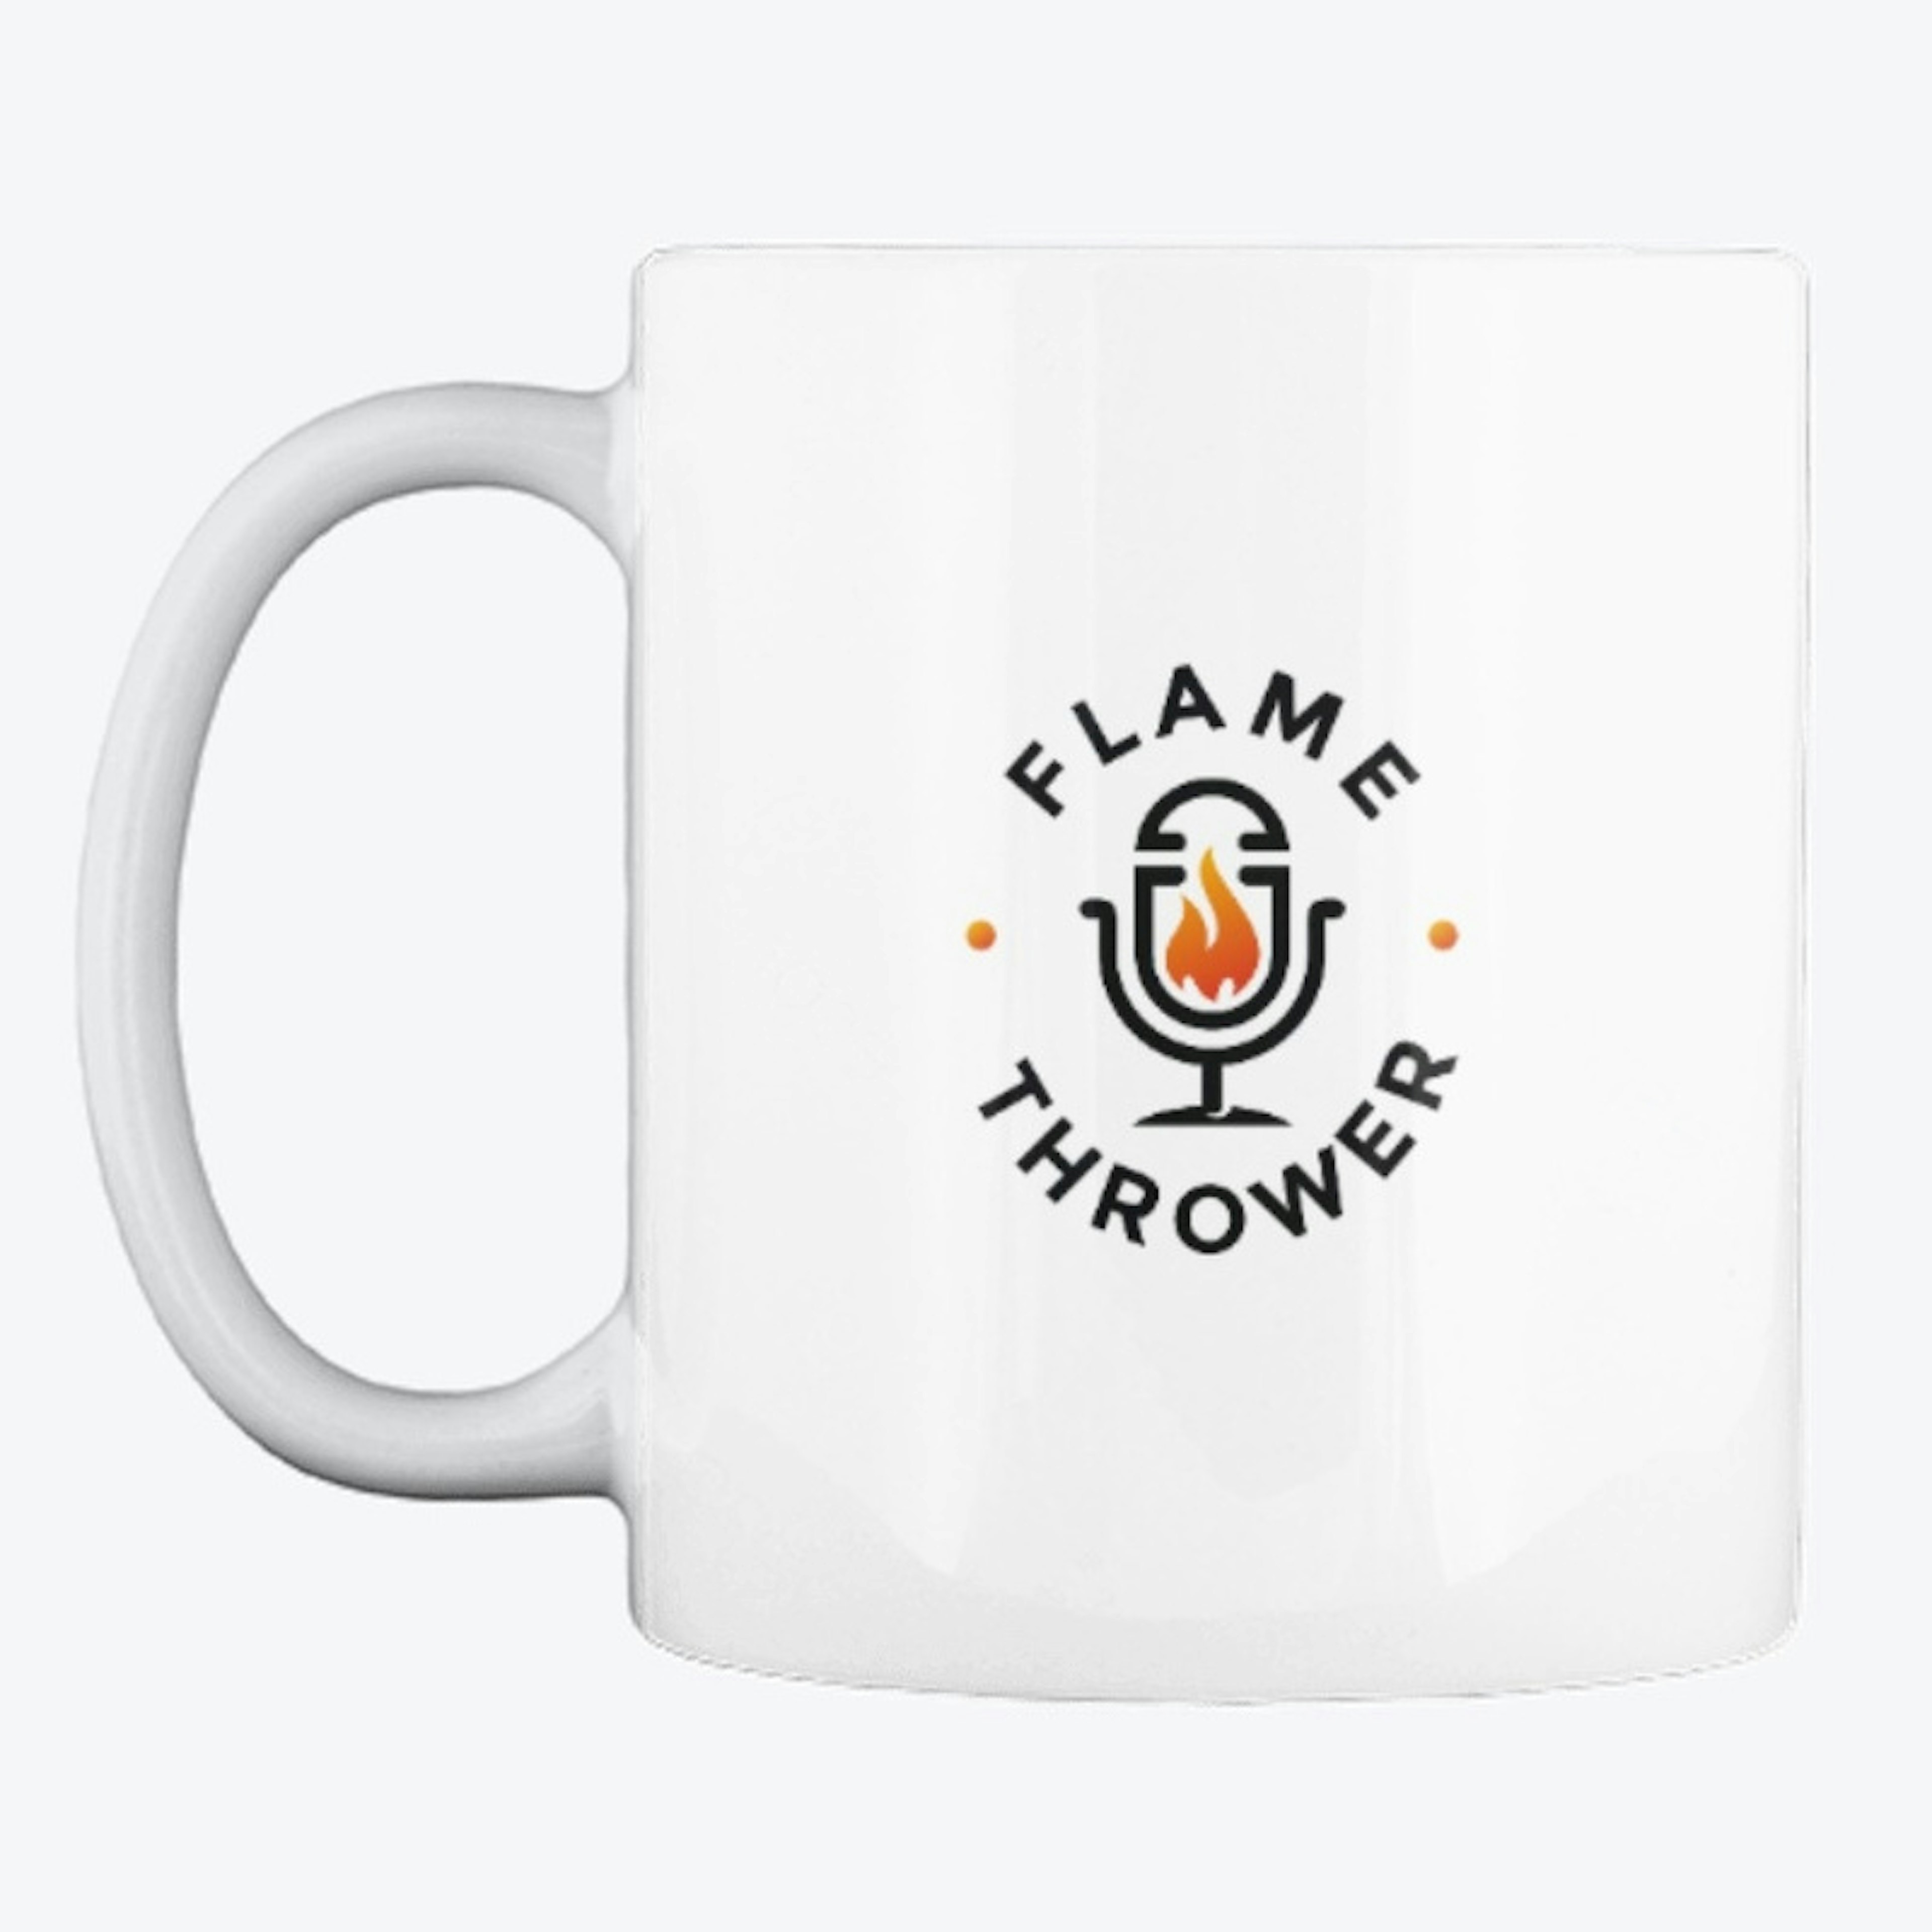 Flamethower mic mug